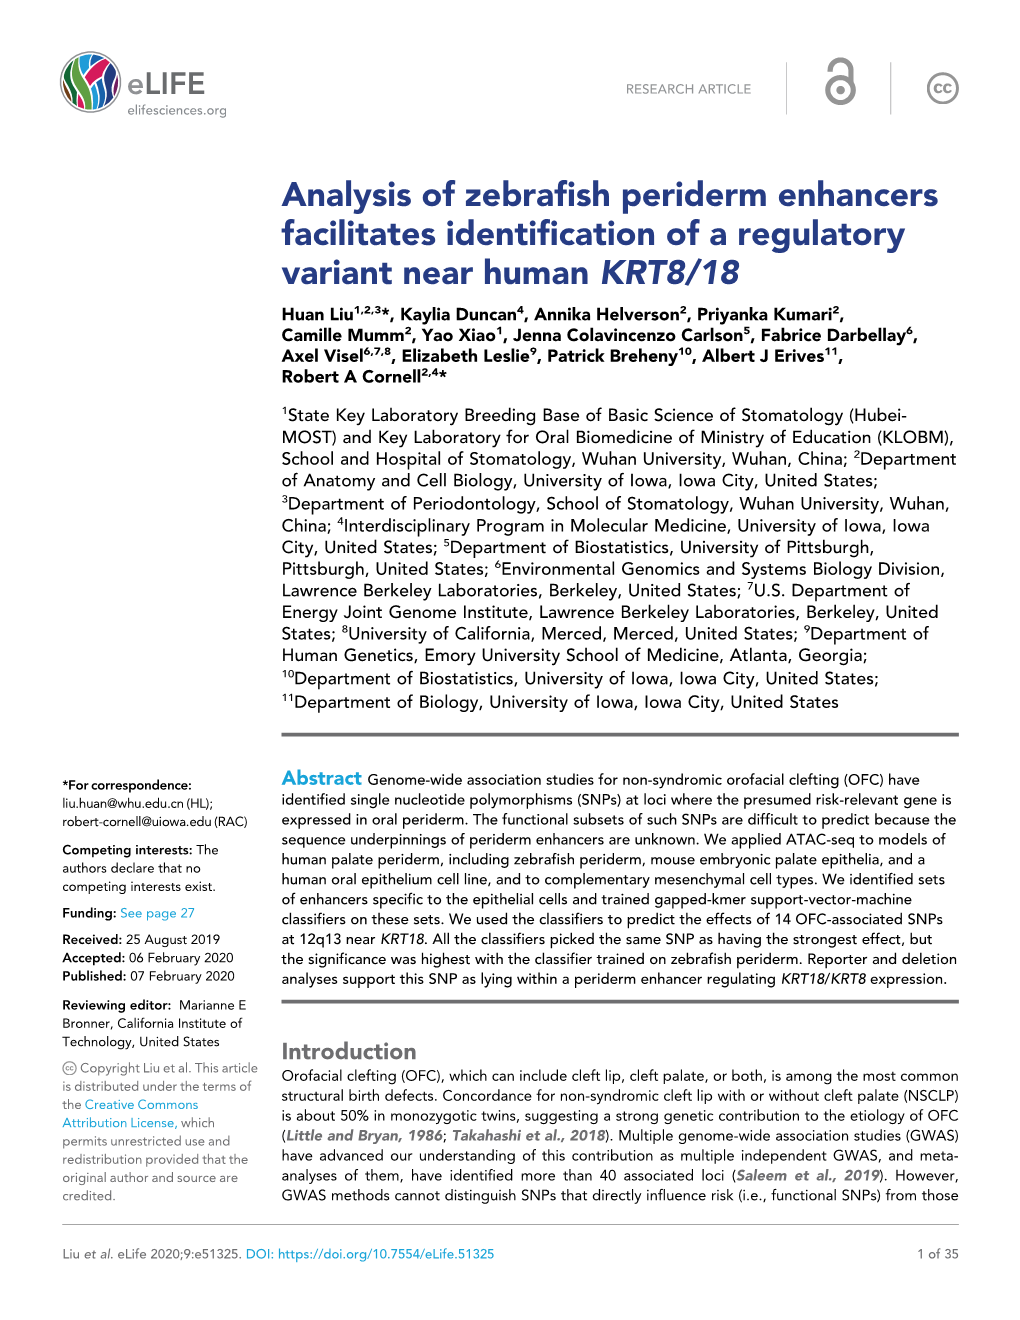 Analysis of Zebrafish Periderm Enhancers Facilitates Identification of a Regulatory Variant Near Human KRT8/18